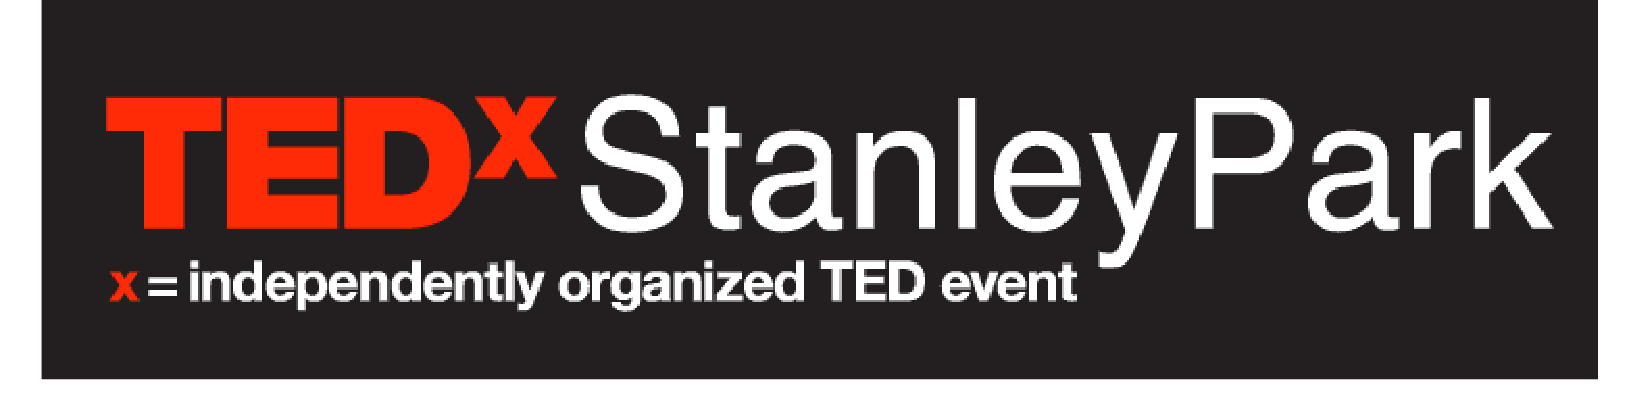 TEDxStanleyPark-Logos-White-Vector-01